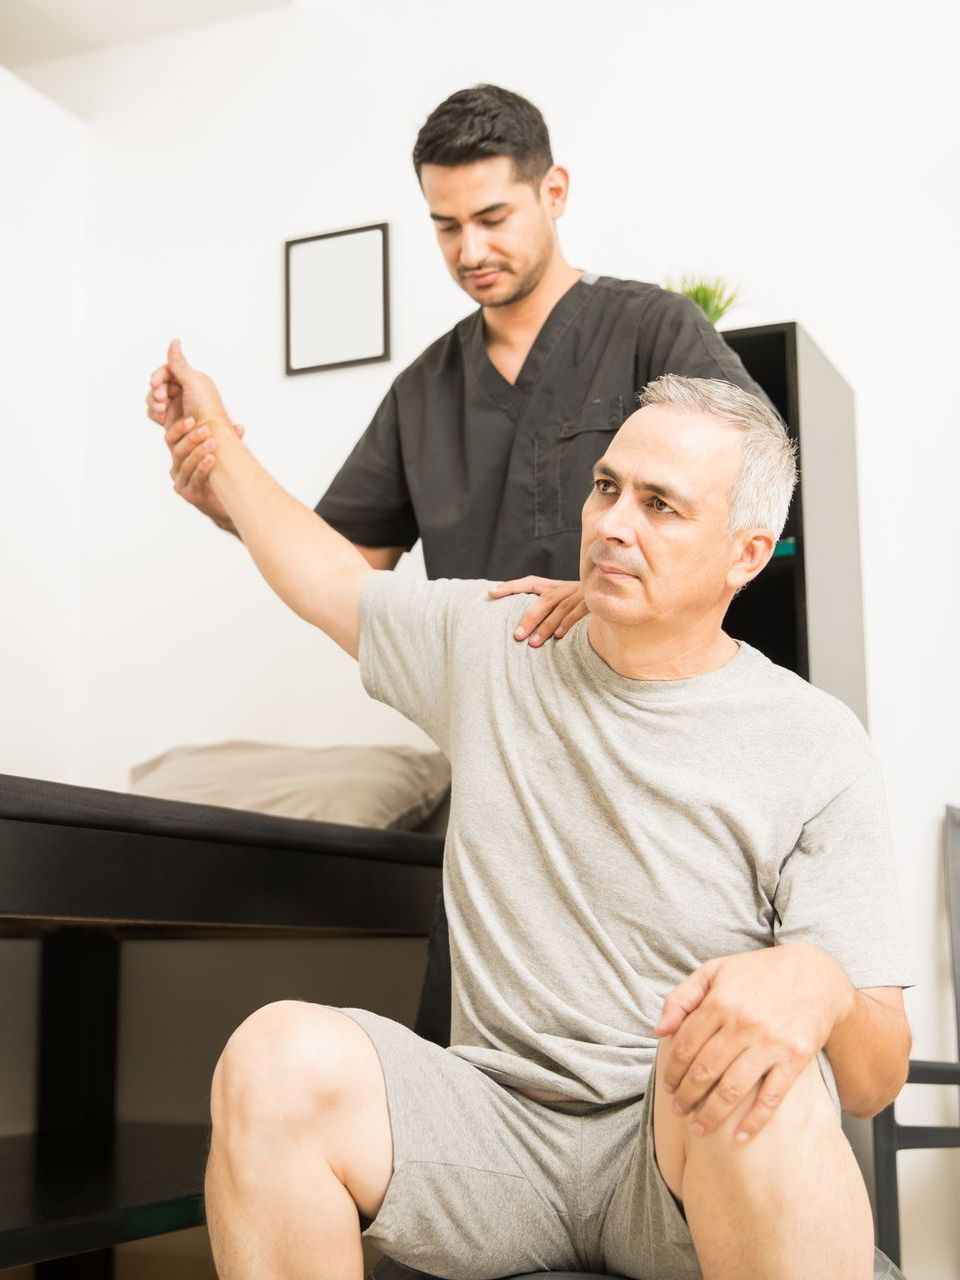 physiotherapist examining patient's arm